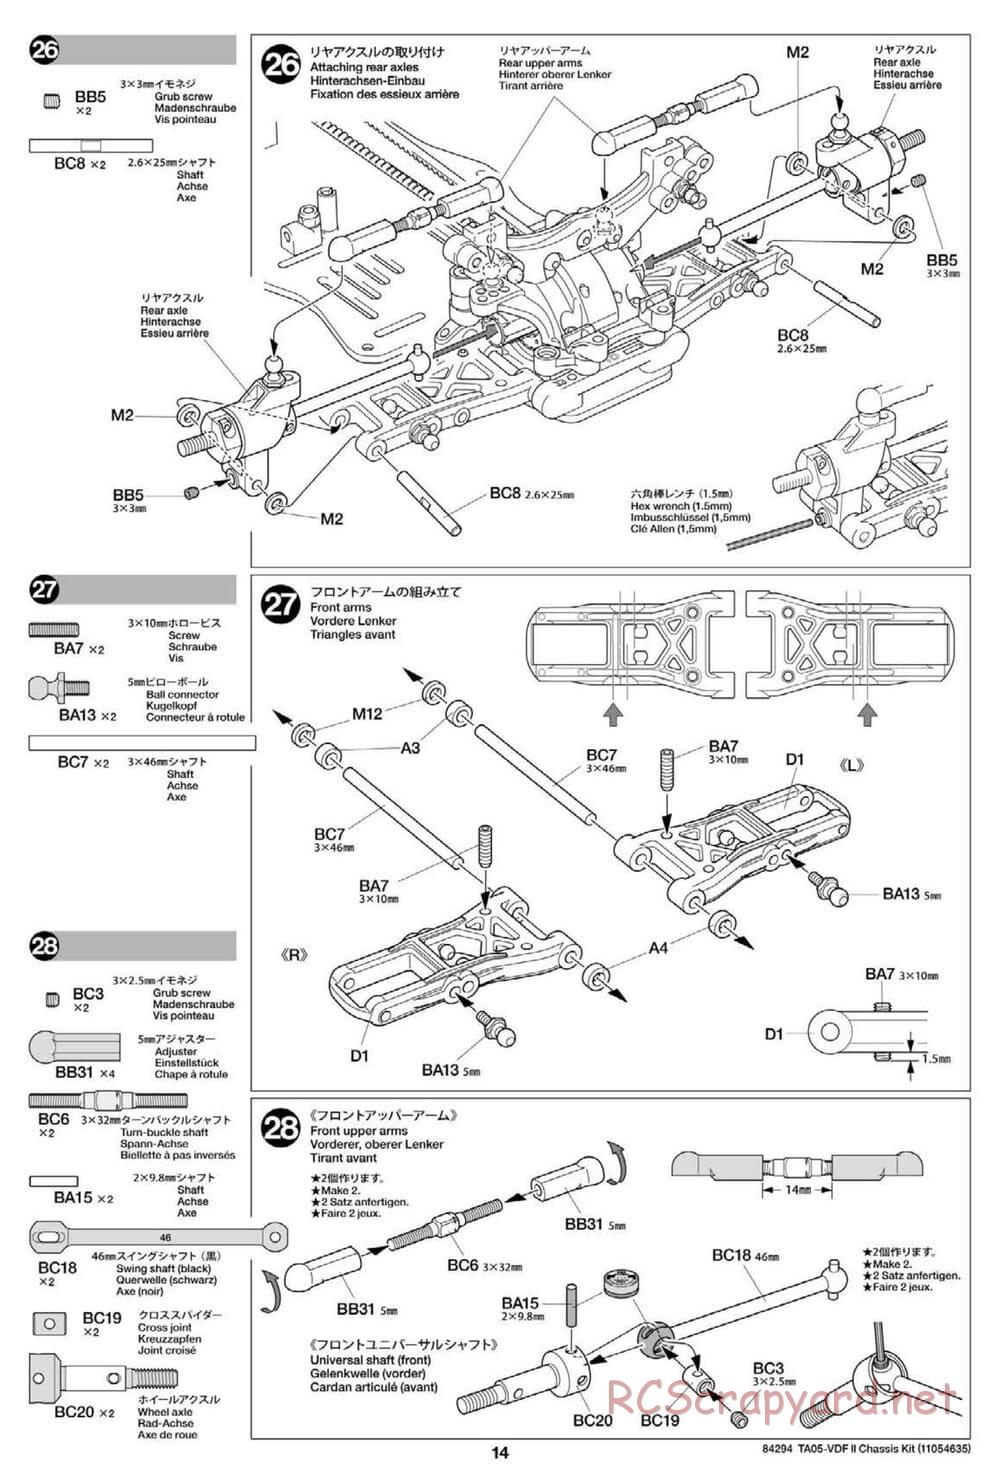 Tamiya - TA05-VDF II Drift Chassis - Manual - Page 14